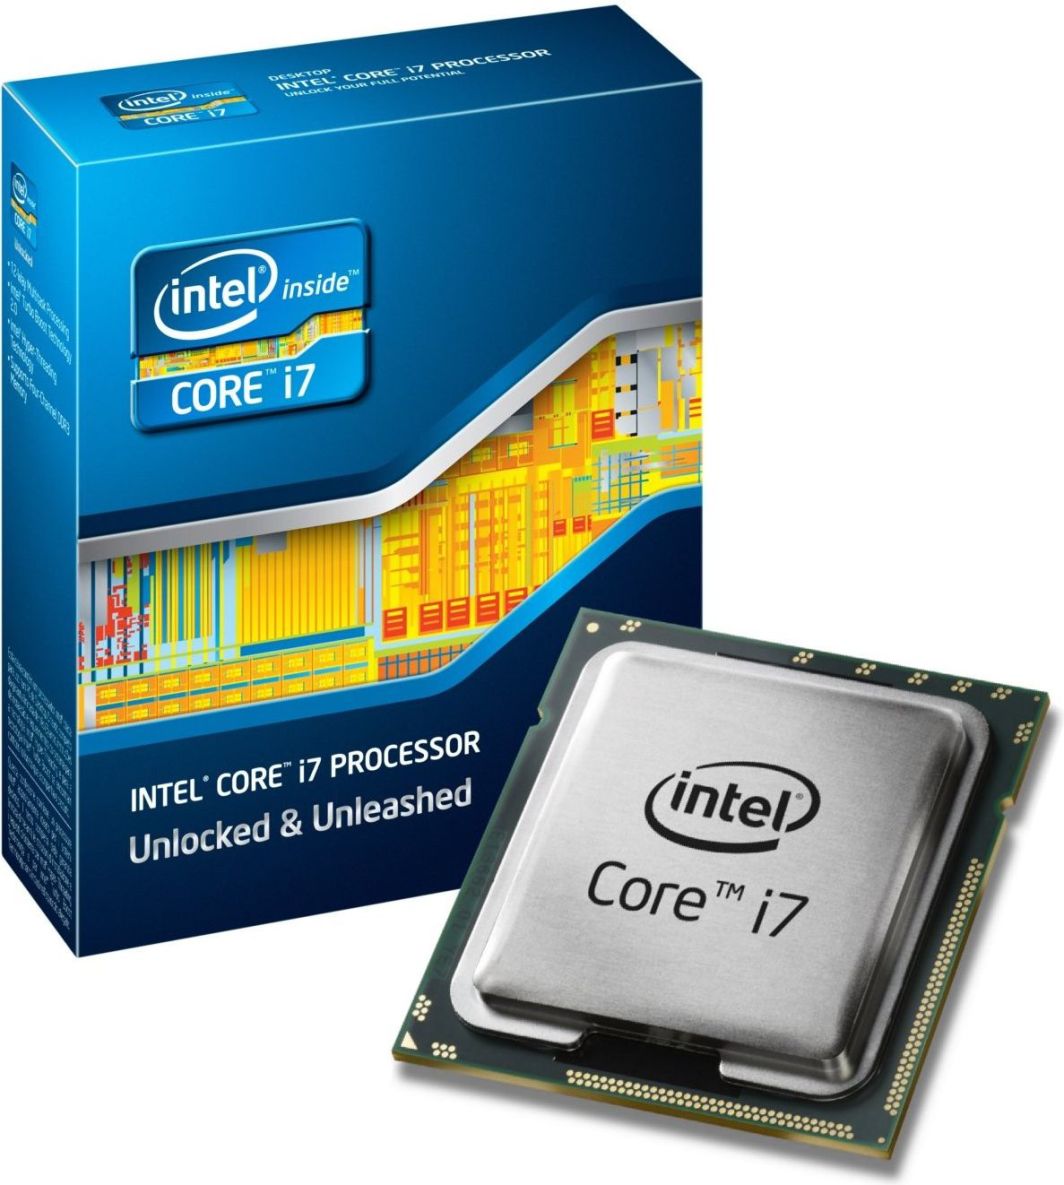 Процессор интел коре i7. Процессор Intel® Core™ i7. Процессор Интел Core i7. Процессор для ноутбука Intel Core i7. Процессор Интел коре ай 7.